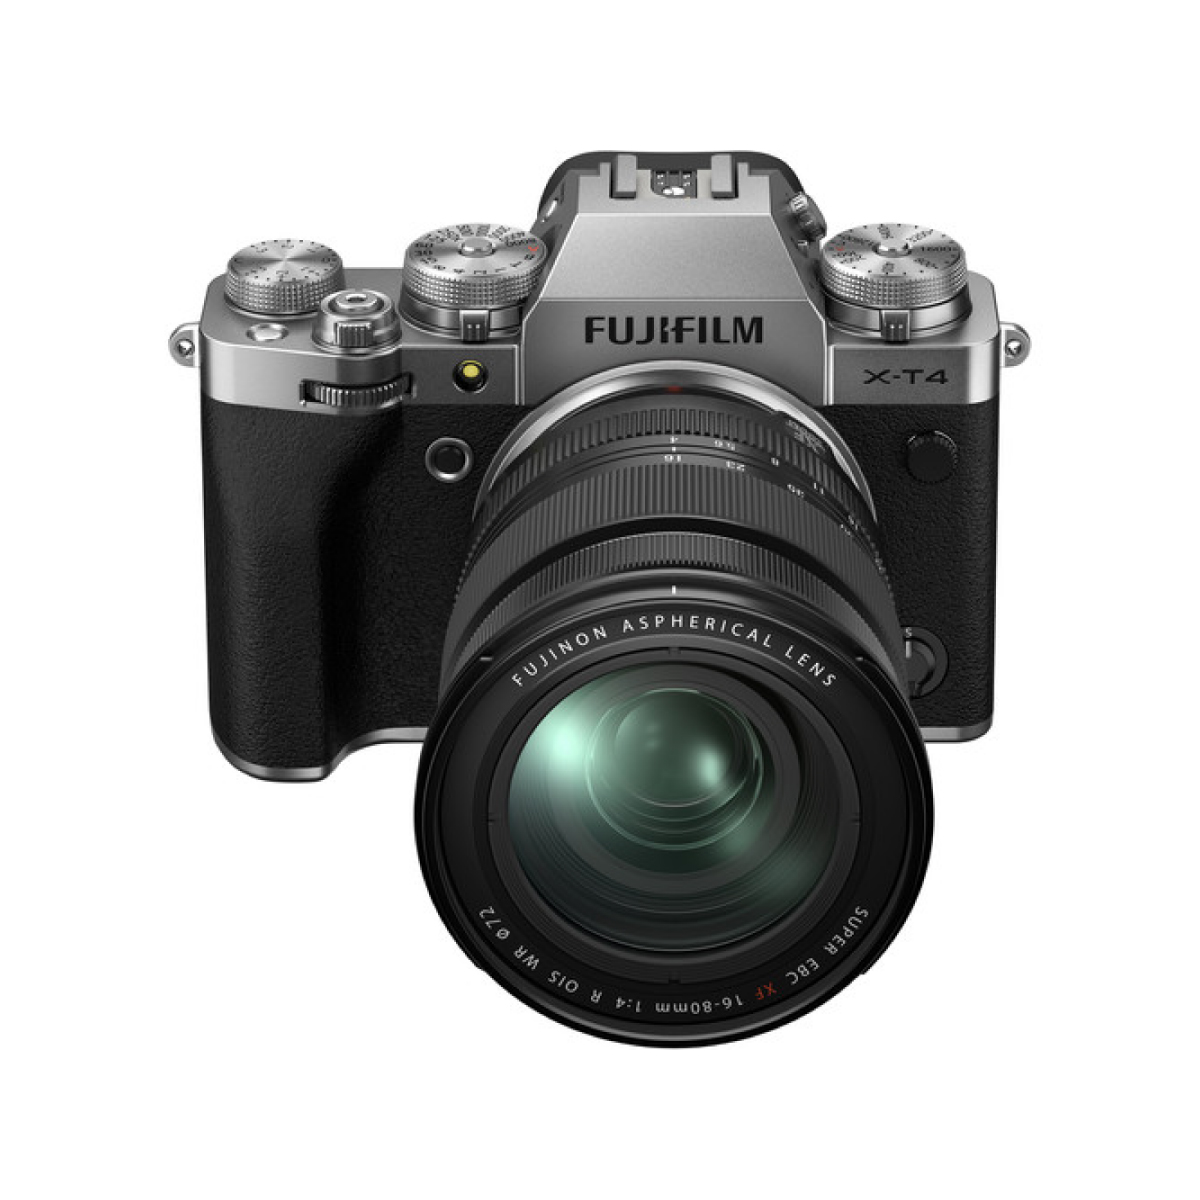 Fujifilm X-T4 26 MP Mirrorless Camera Body with XF16-80mm Lens – Silver (4)